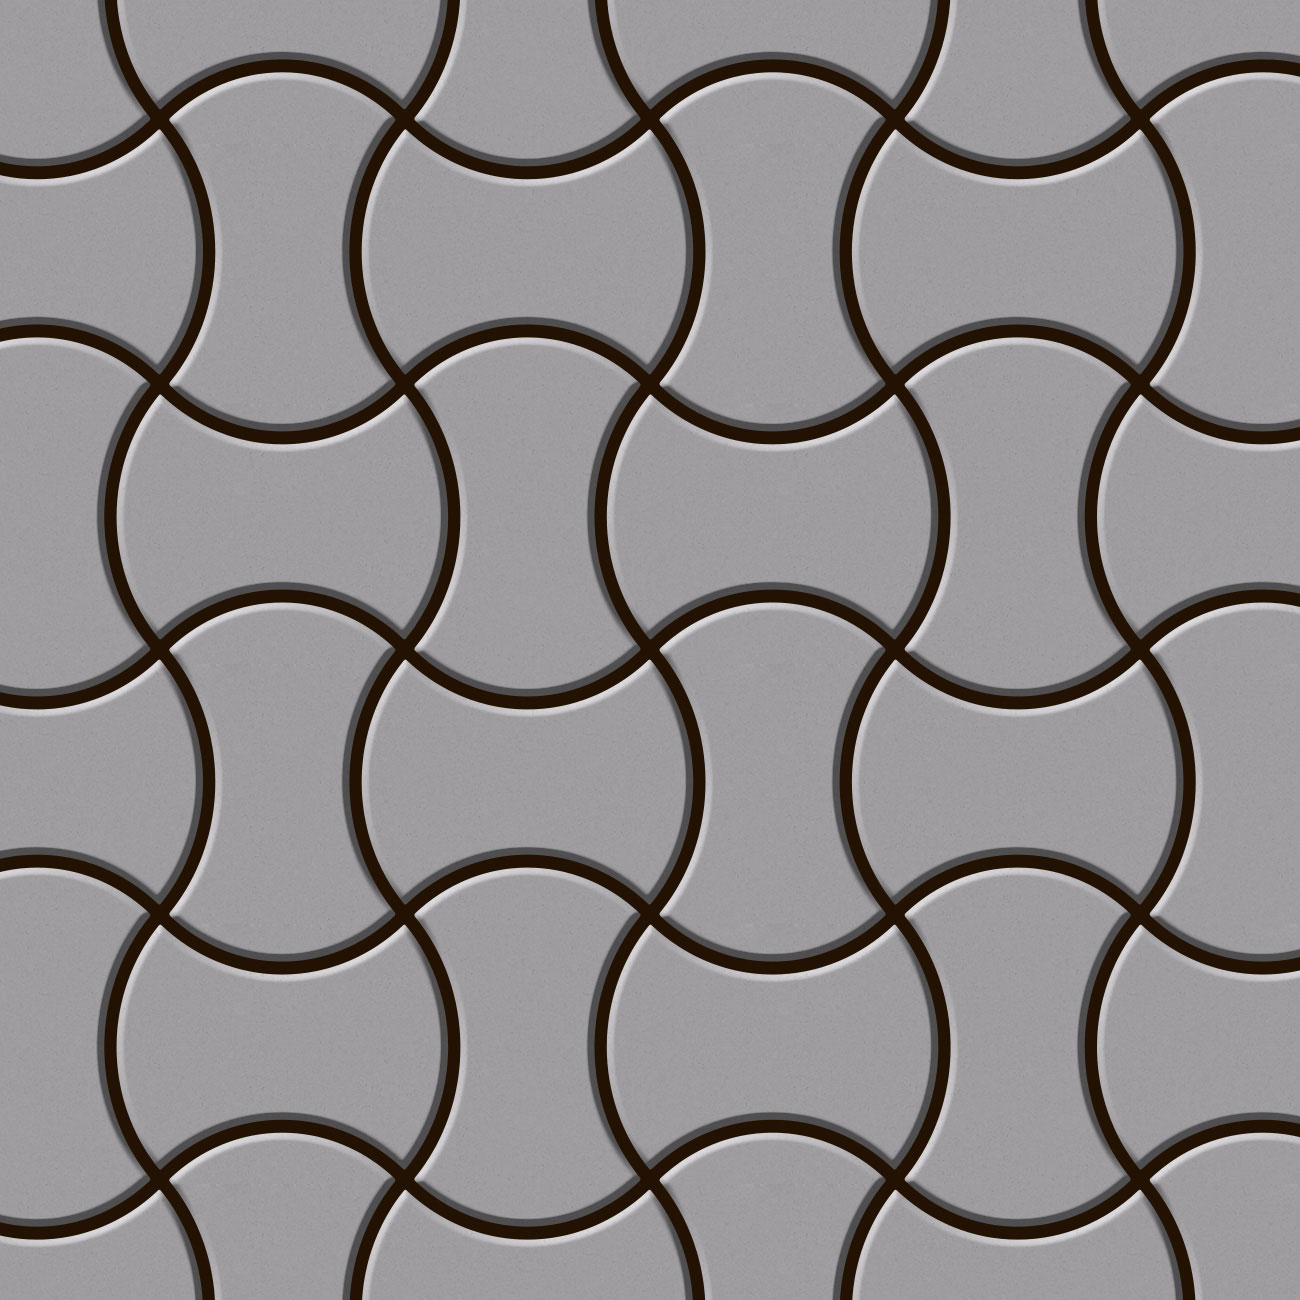 INFINIT Stainless Steel Matte Tiles